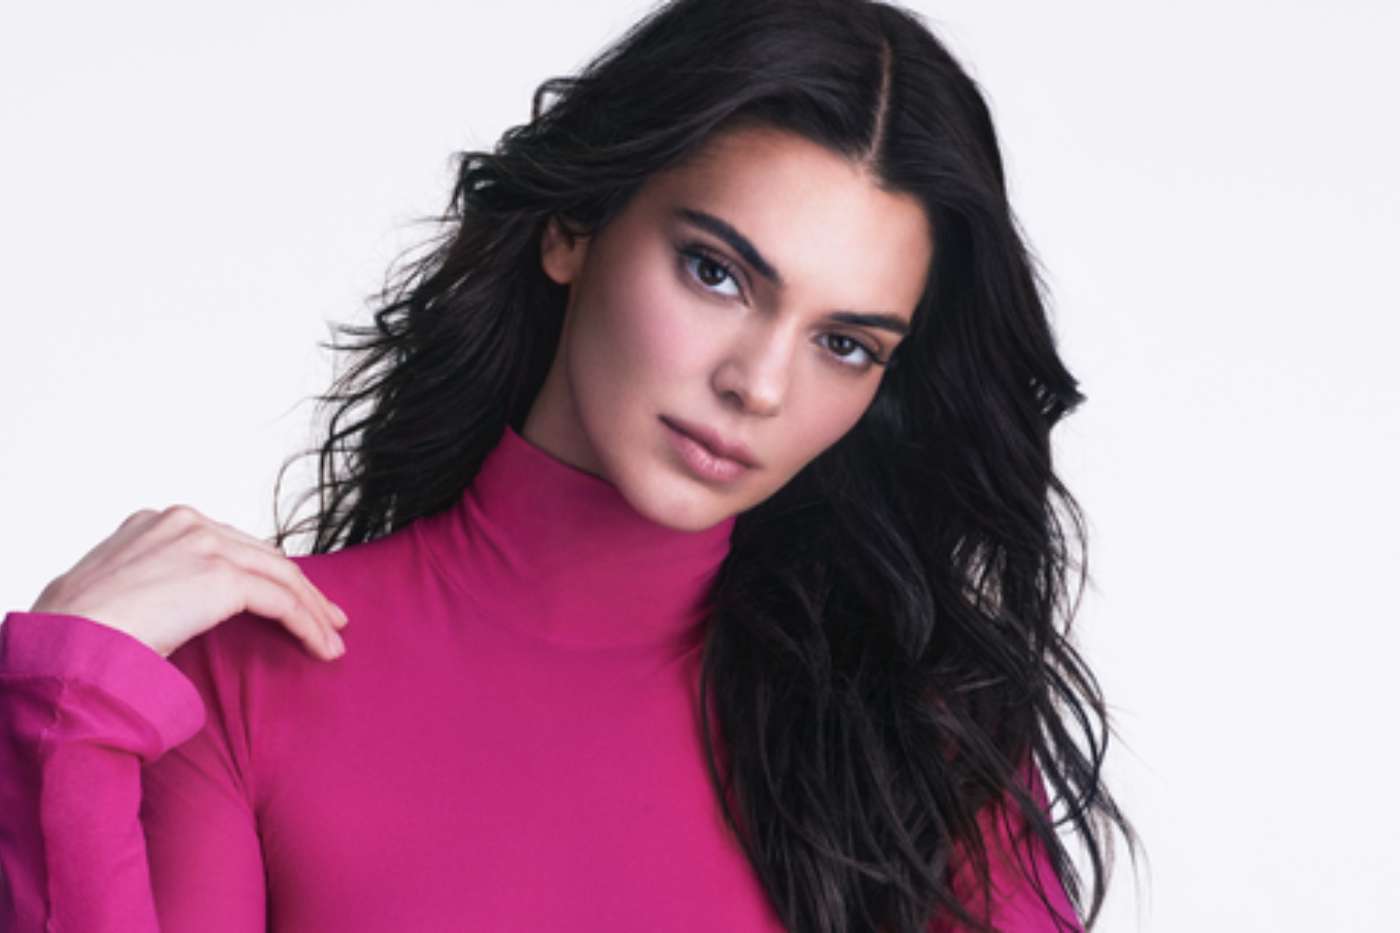 Kendall Jenner appointed as new global ambassador for L’Oréal Paris